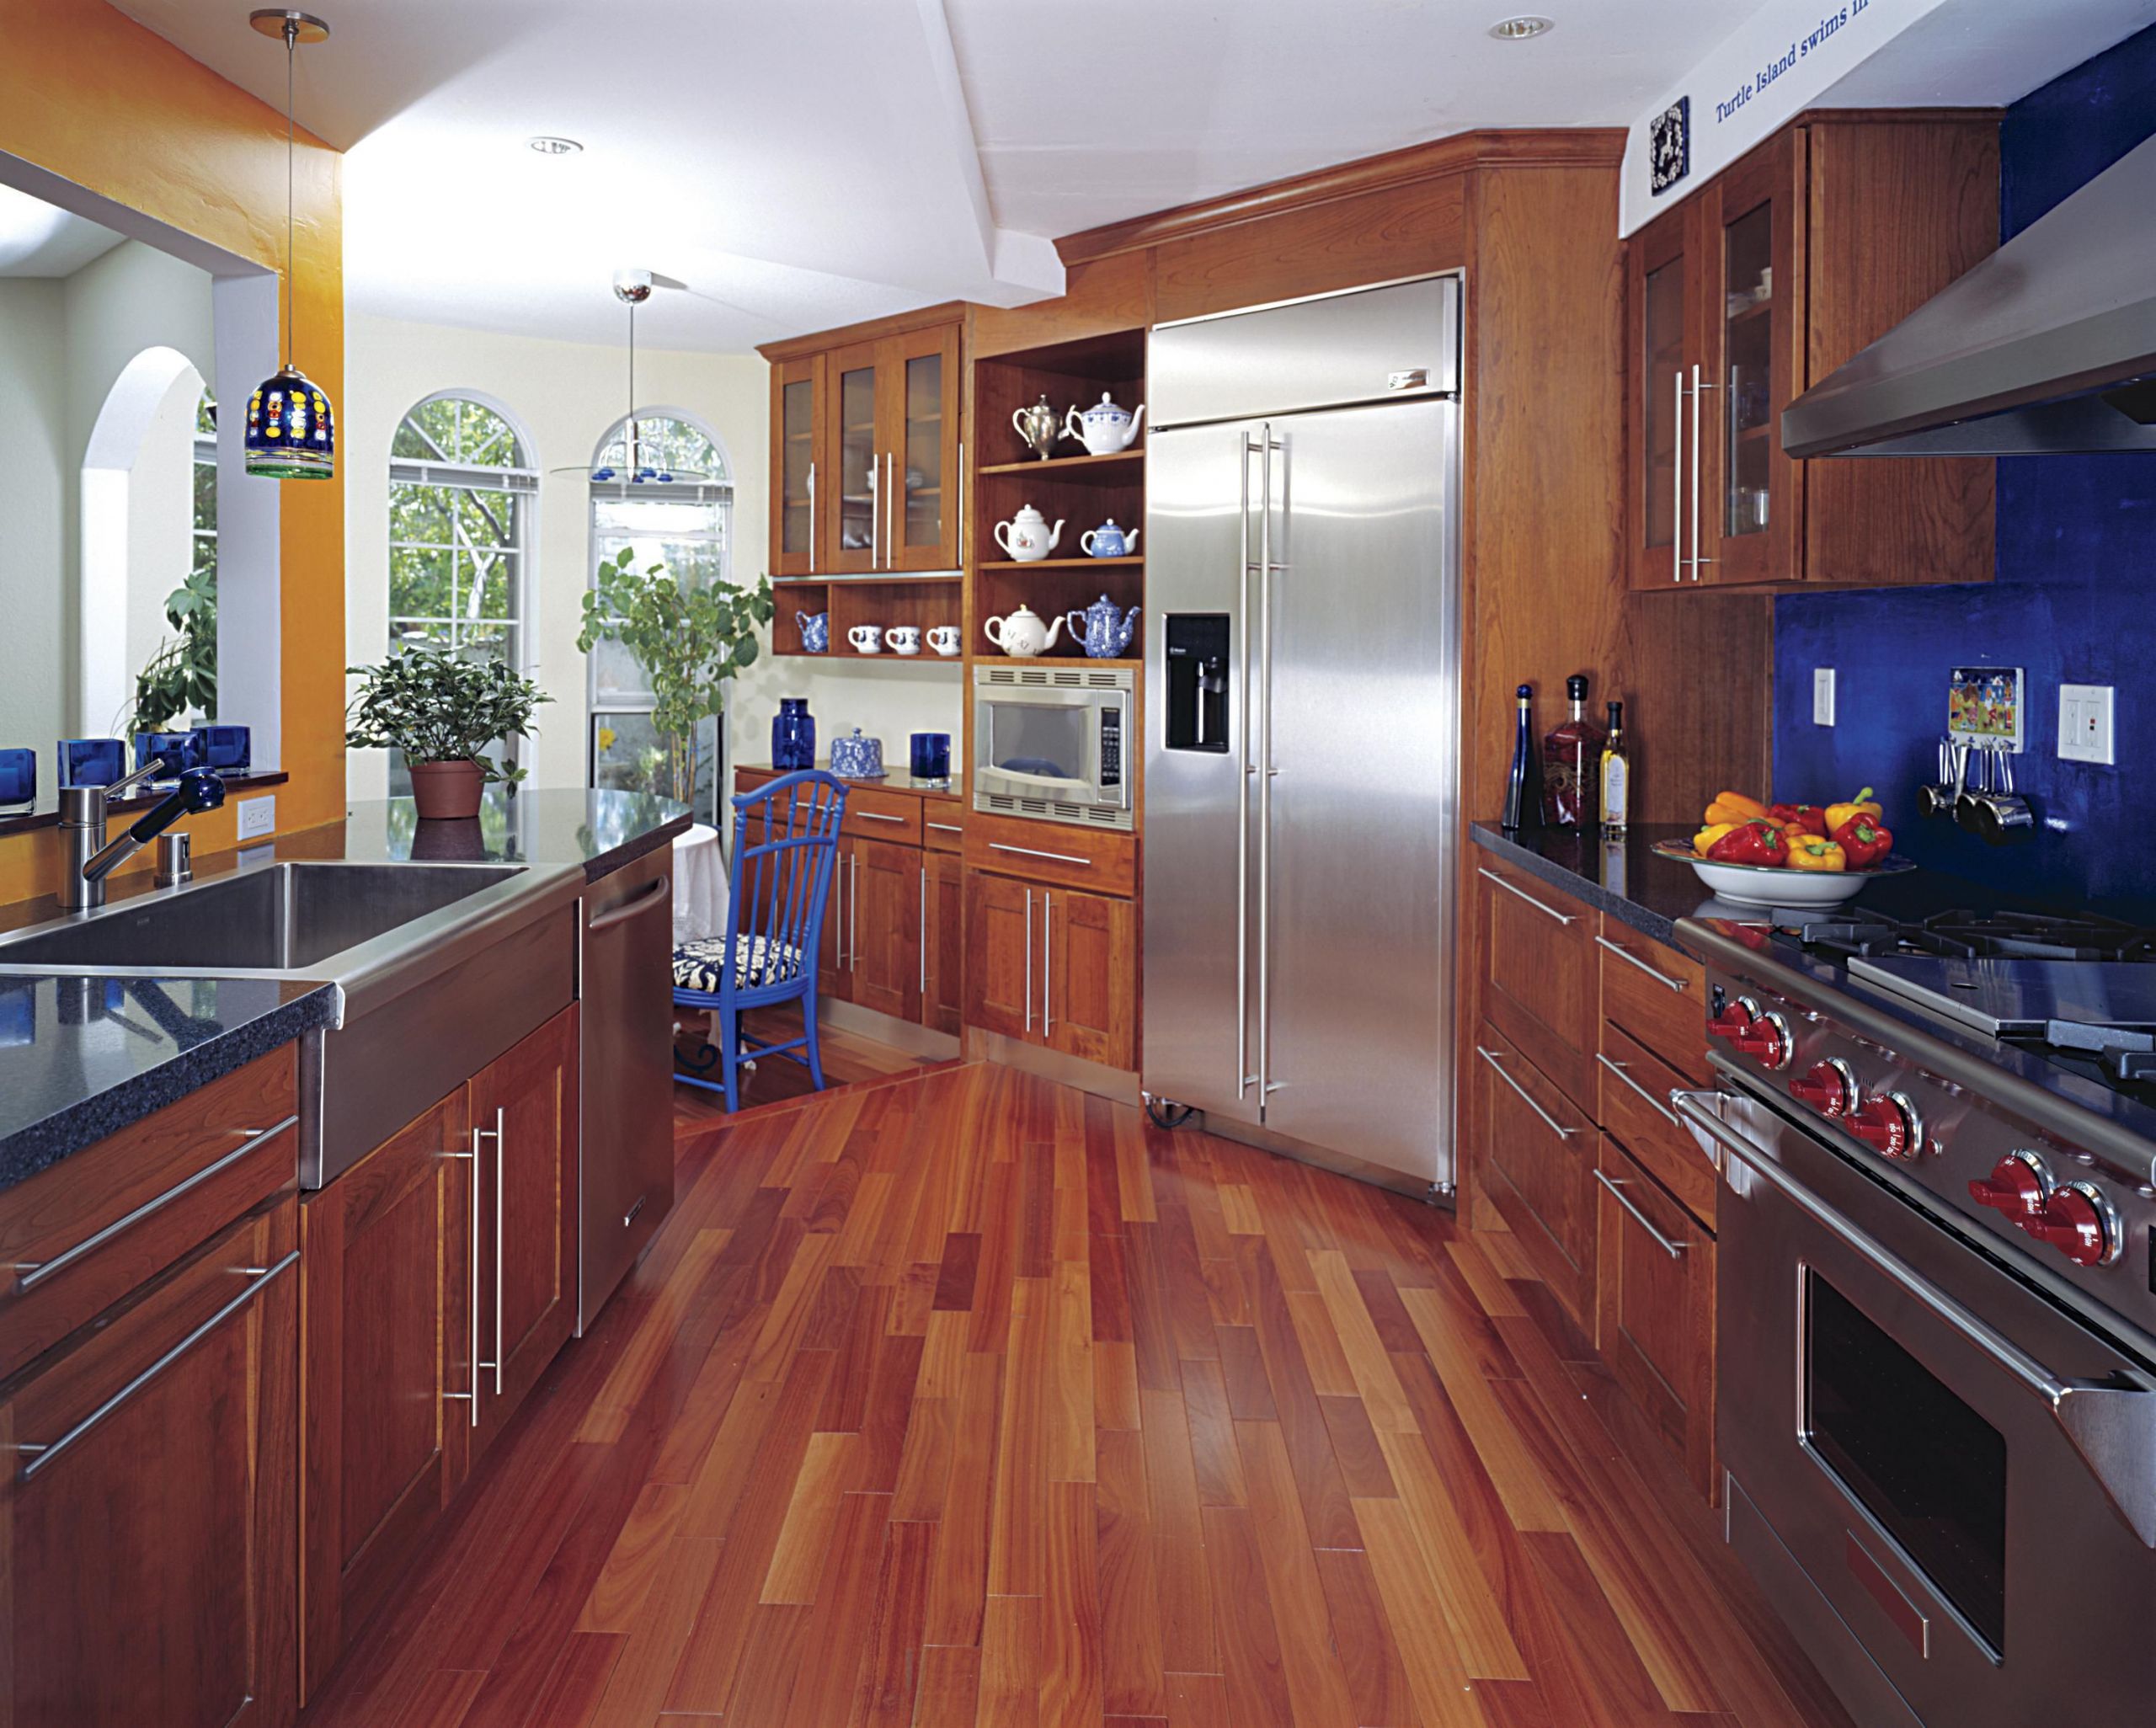 Wood Floor Kitchens
 Hardwood Floor In a Kitchen Is This Allowed